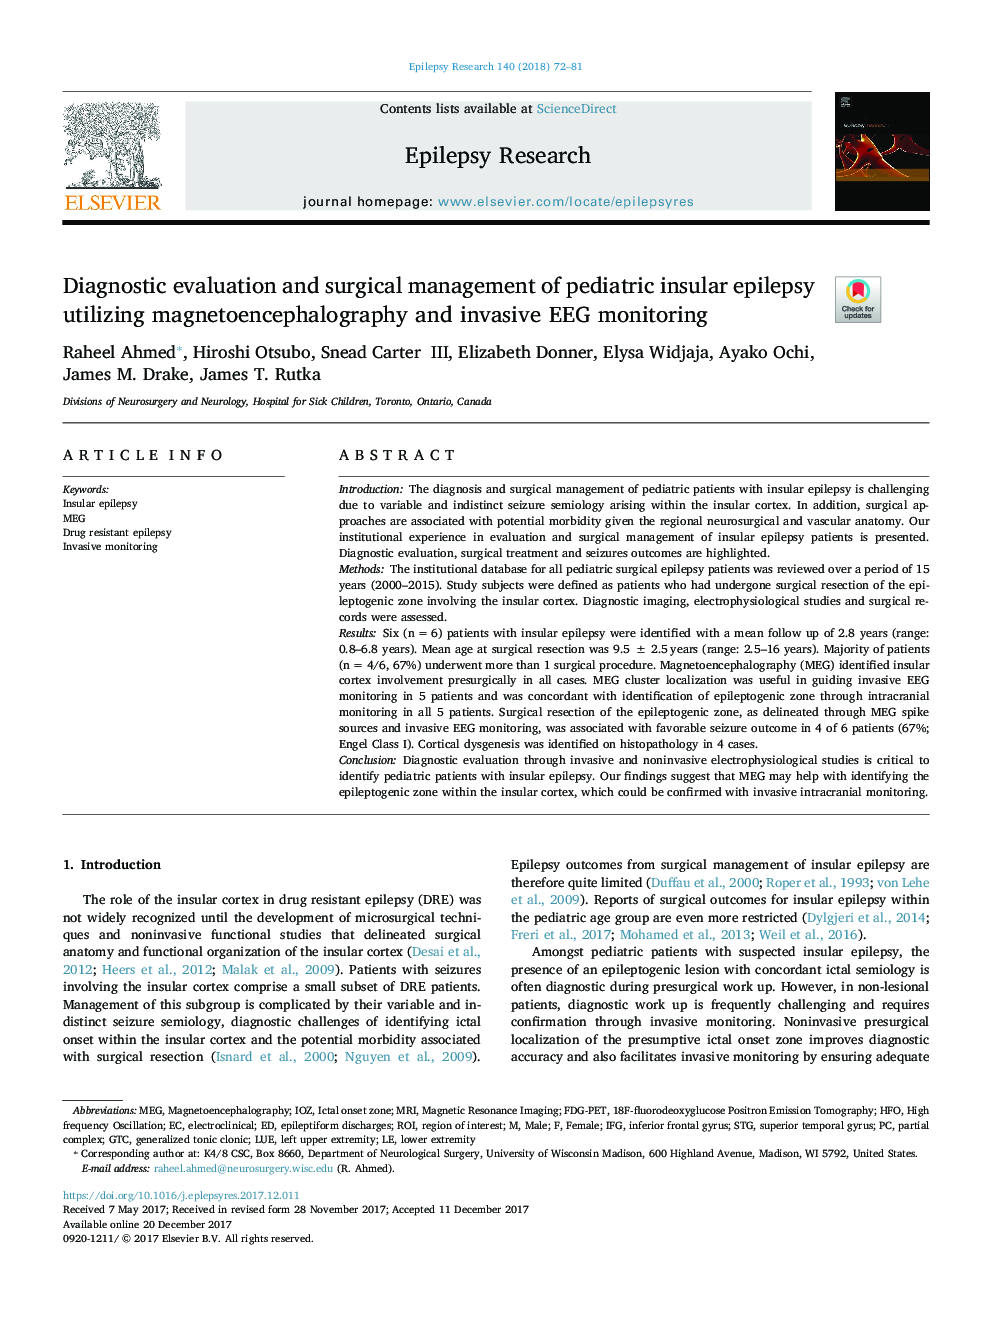 Diagnostic evaluation and surgical management of pediatric insular epilepsy utilizing magnetoencephalography and invasive EEG monitoring